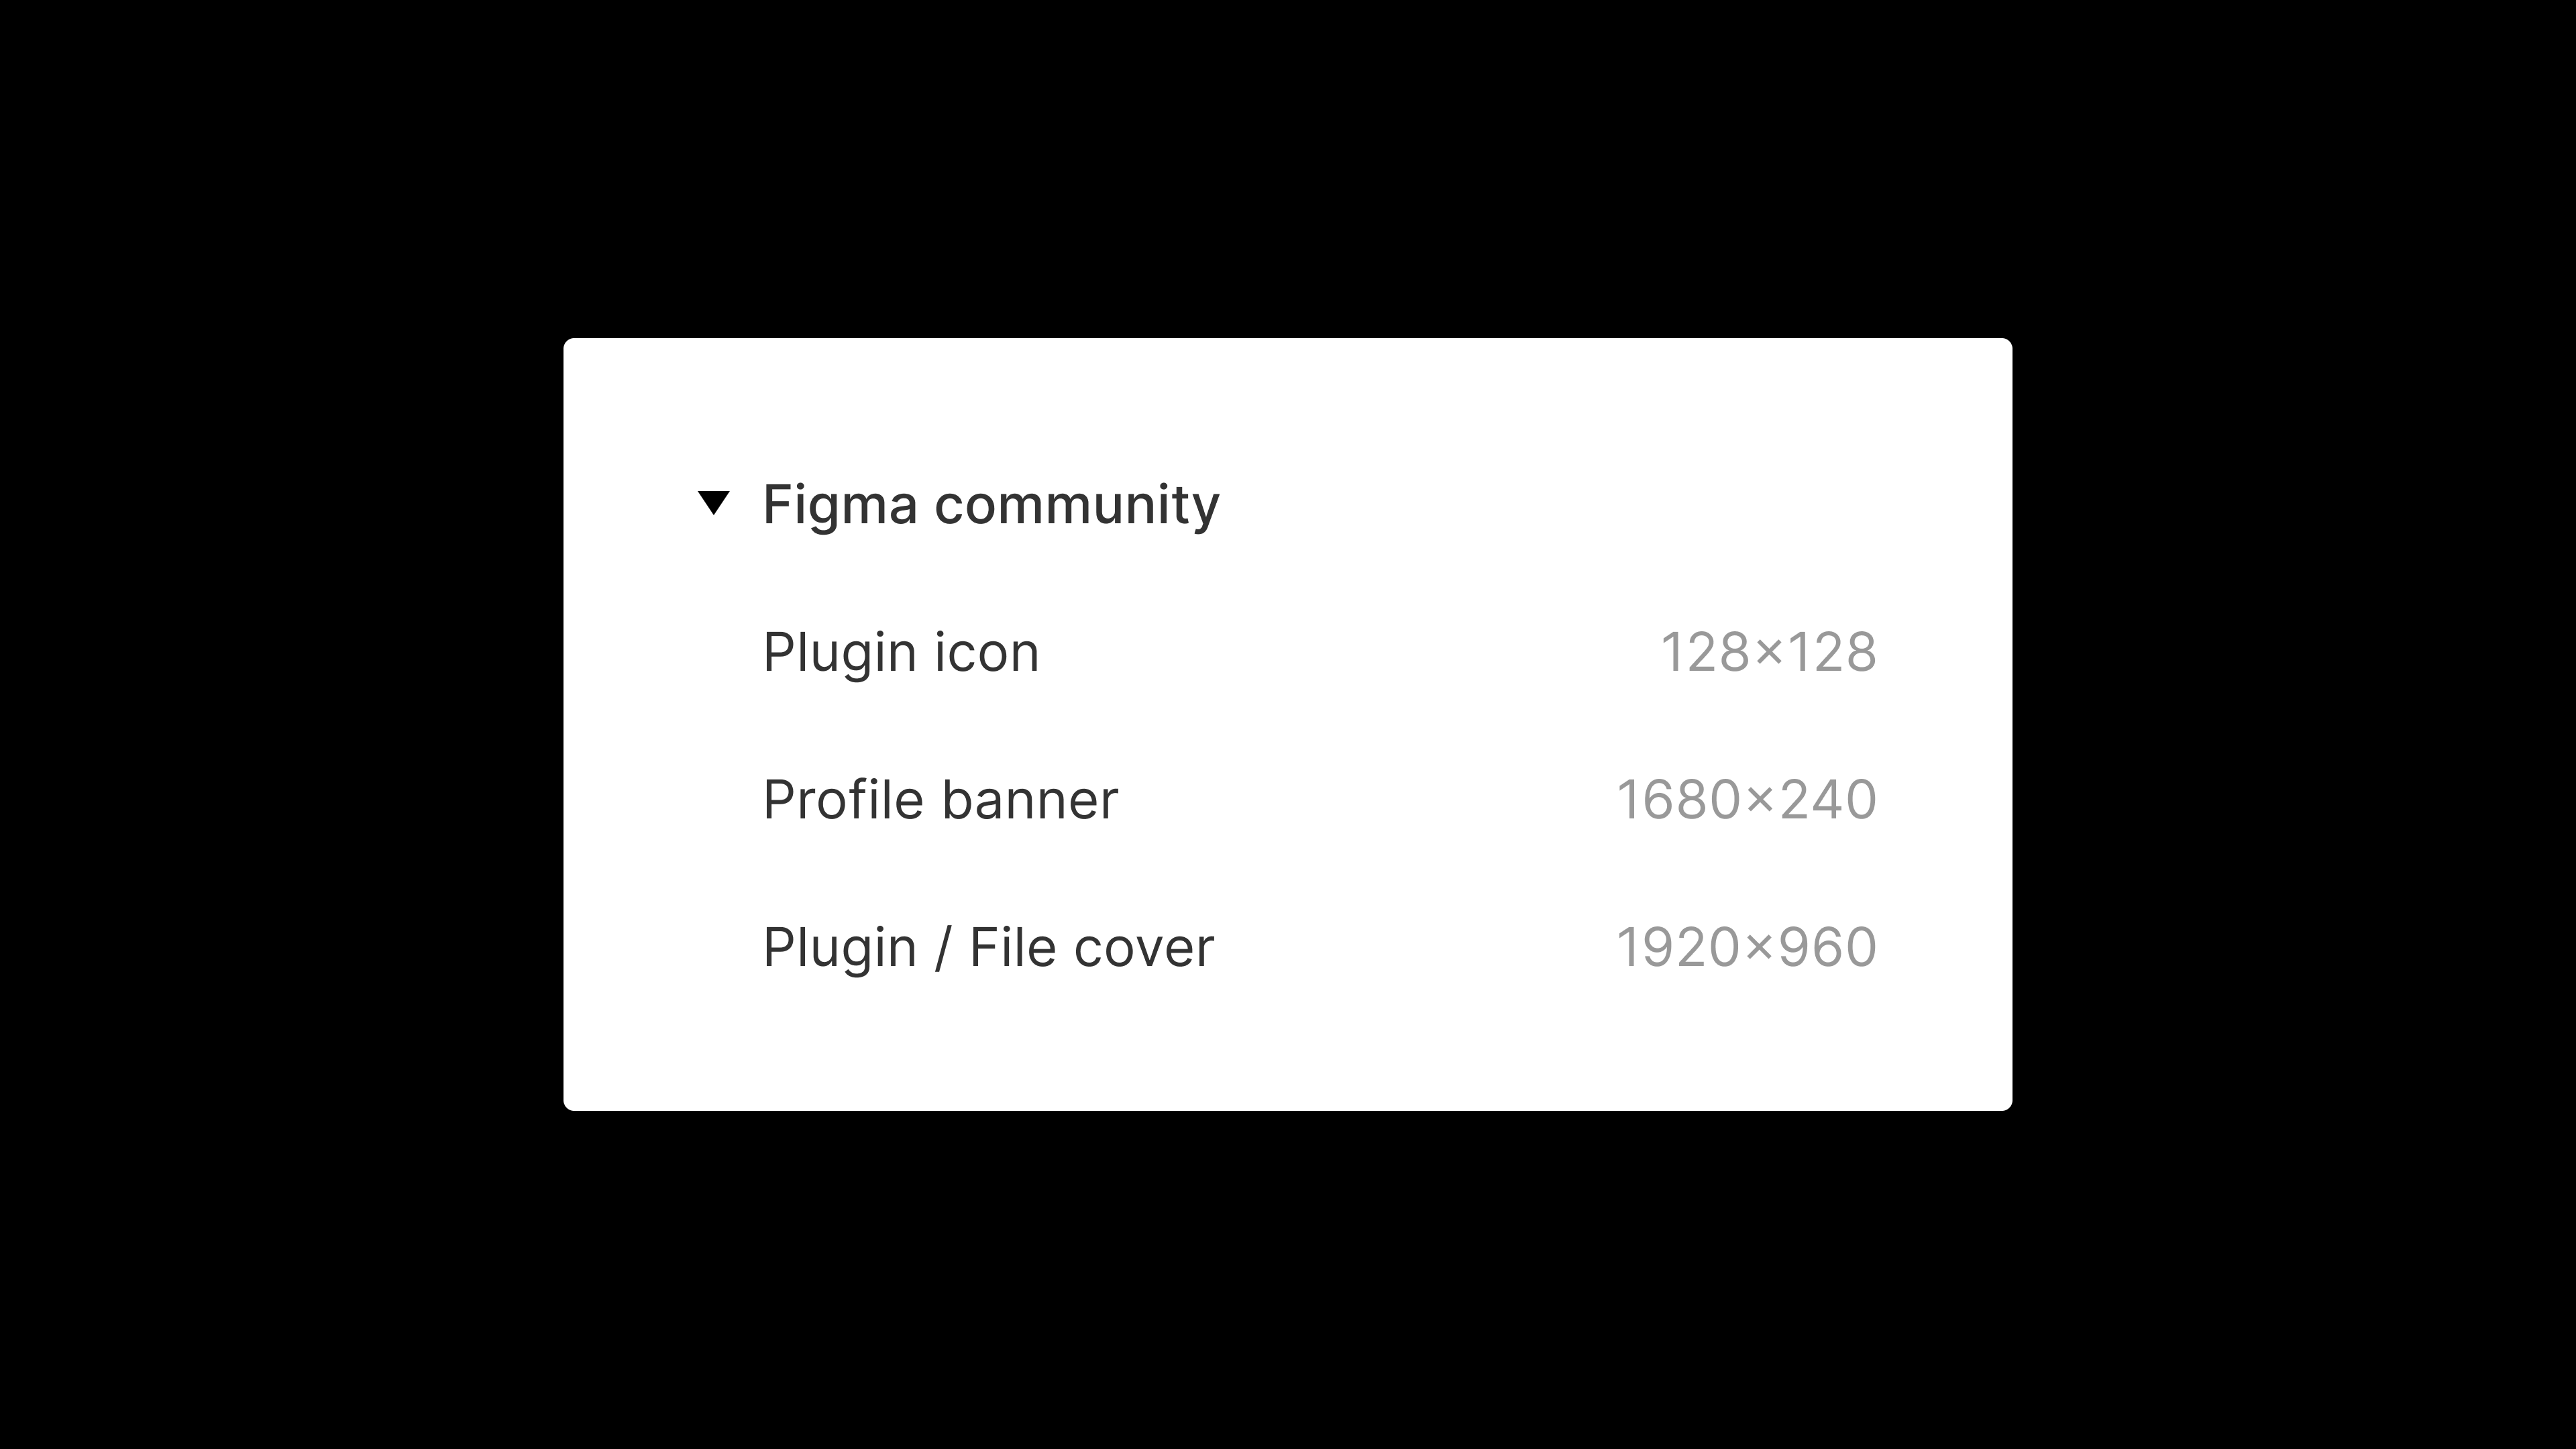 A screenshot of the Figma frame size options for "Figma community."